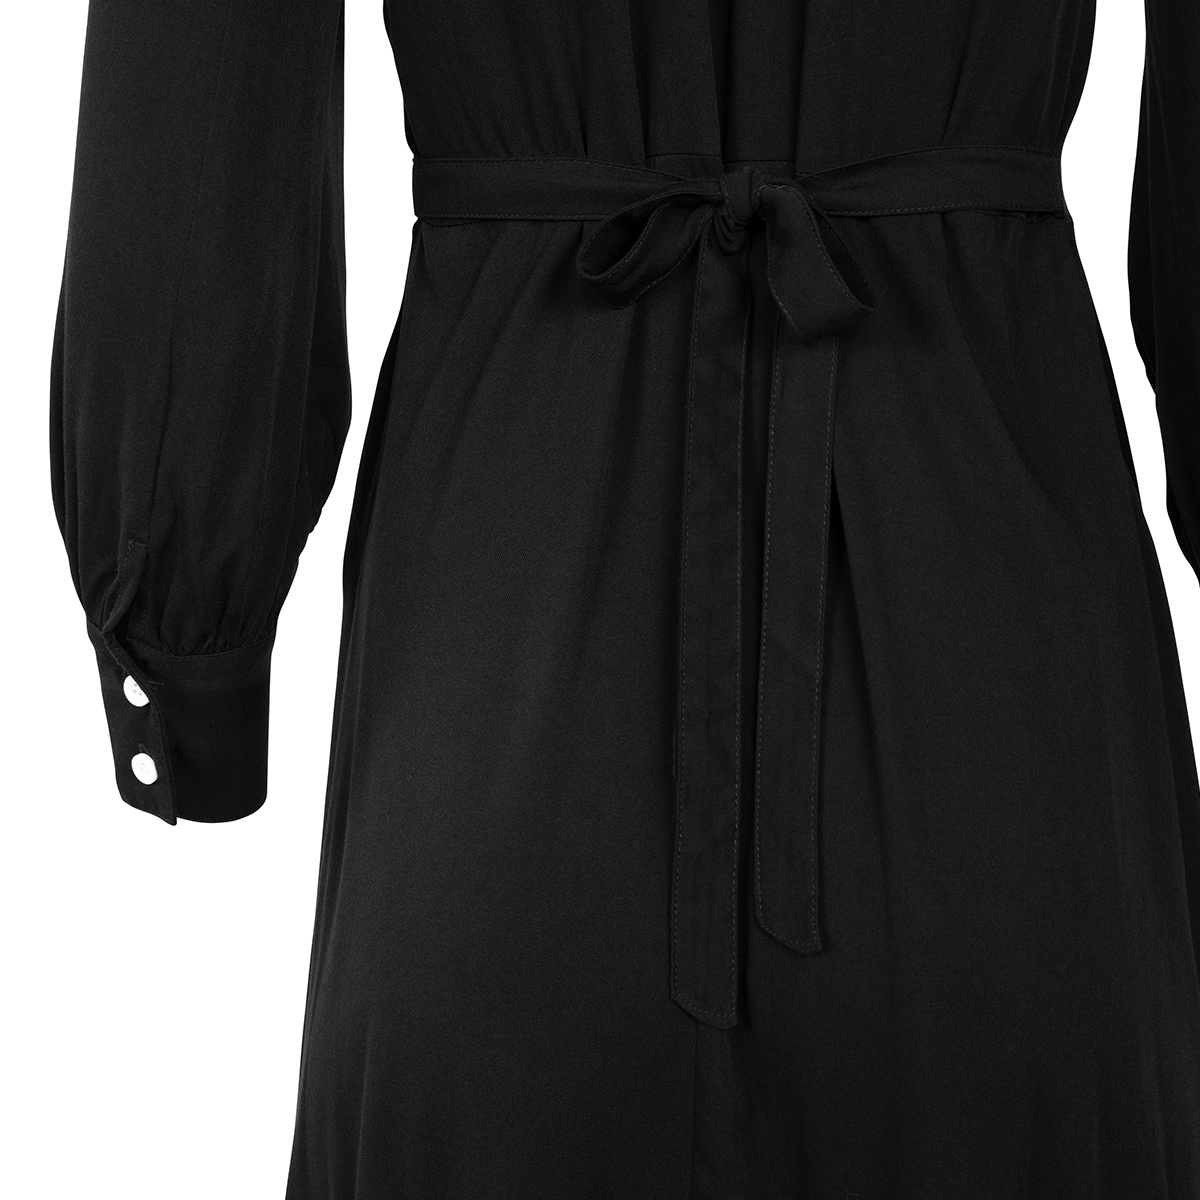 Bells Hells Collection: Laudna Shirt Dress, S - Black - Critical Role